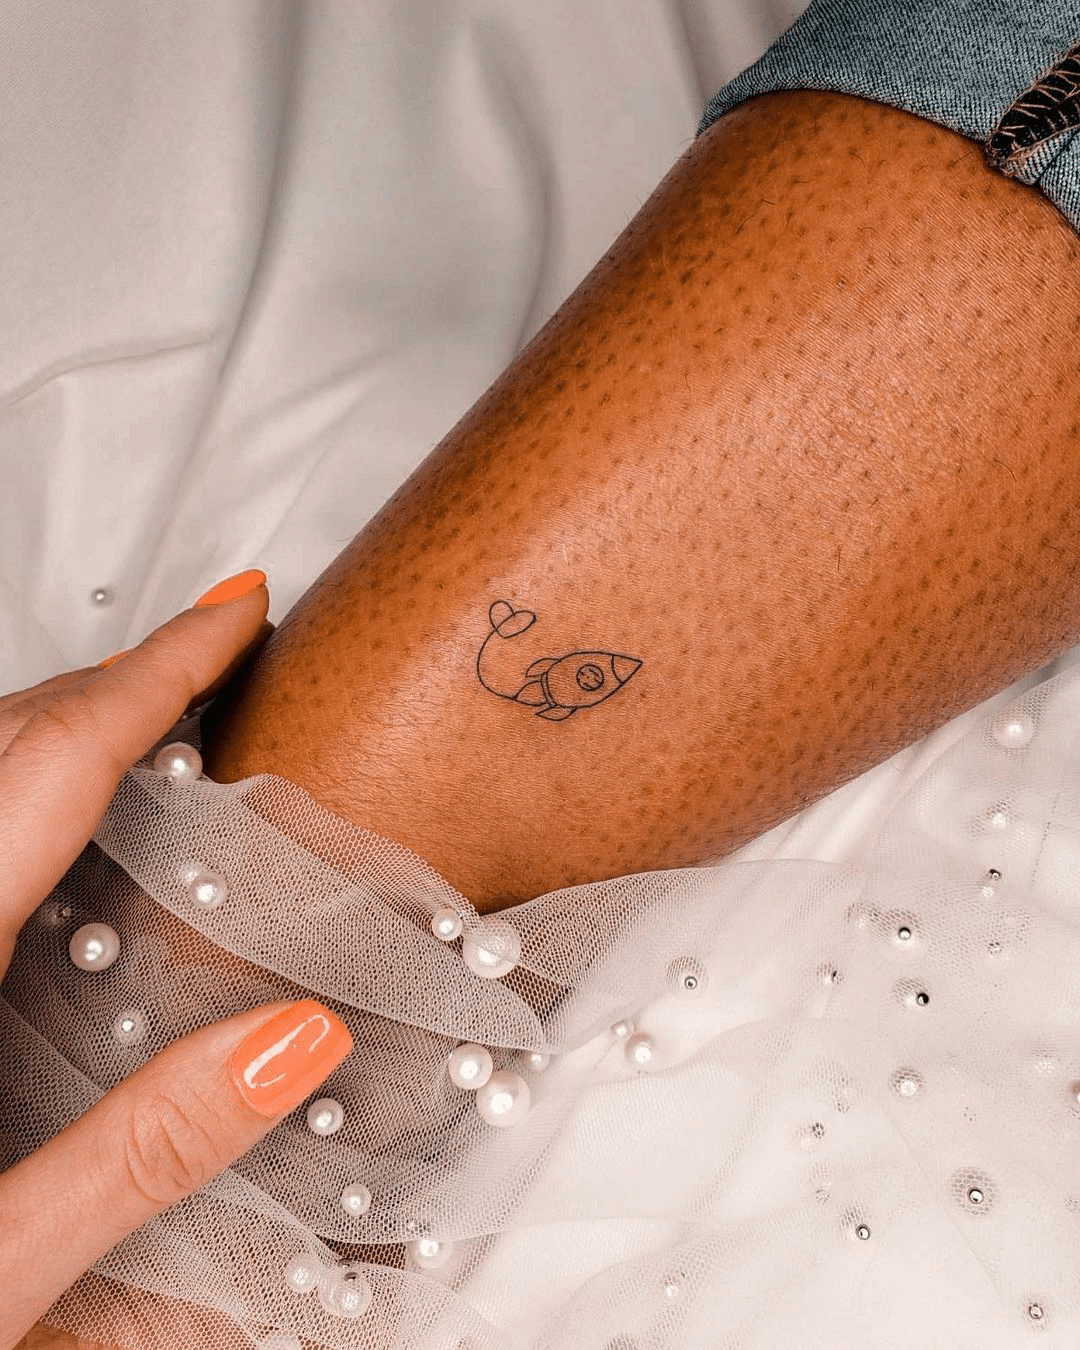 small rocket tattoo design for girls